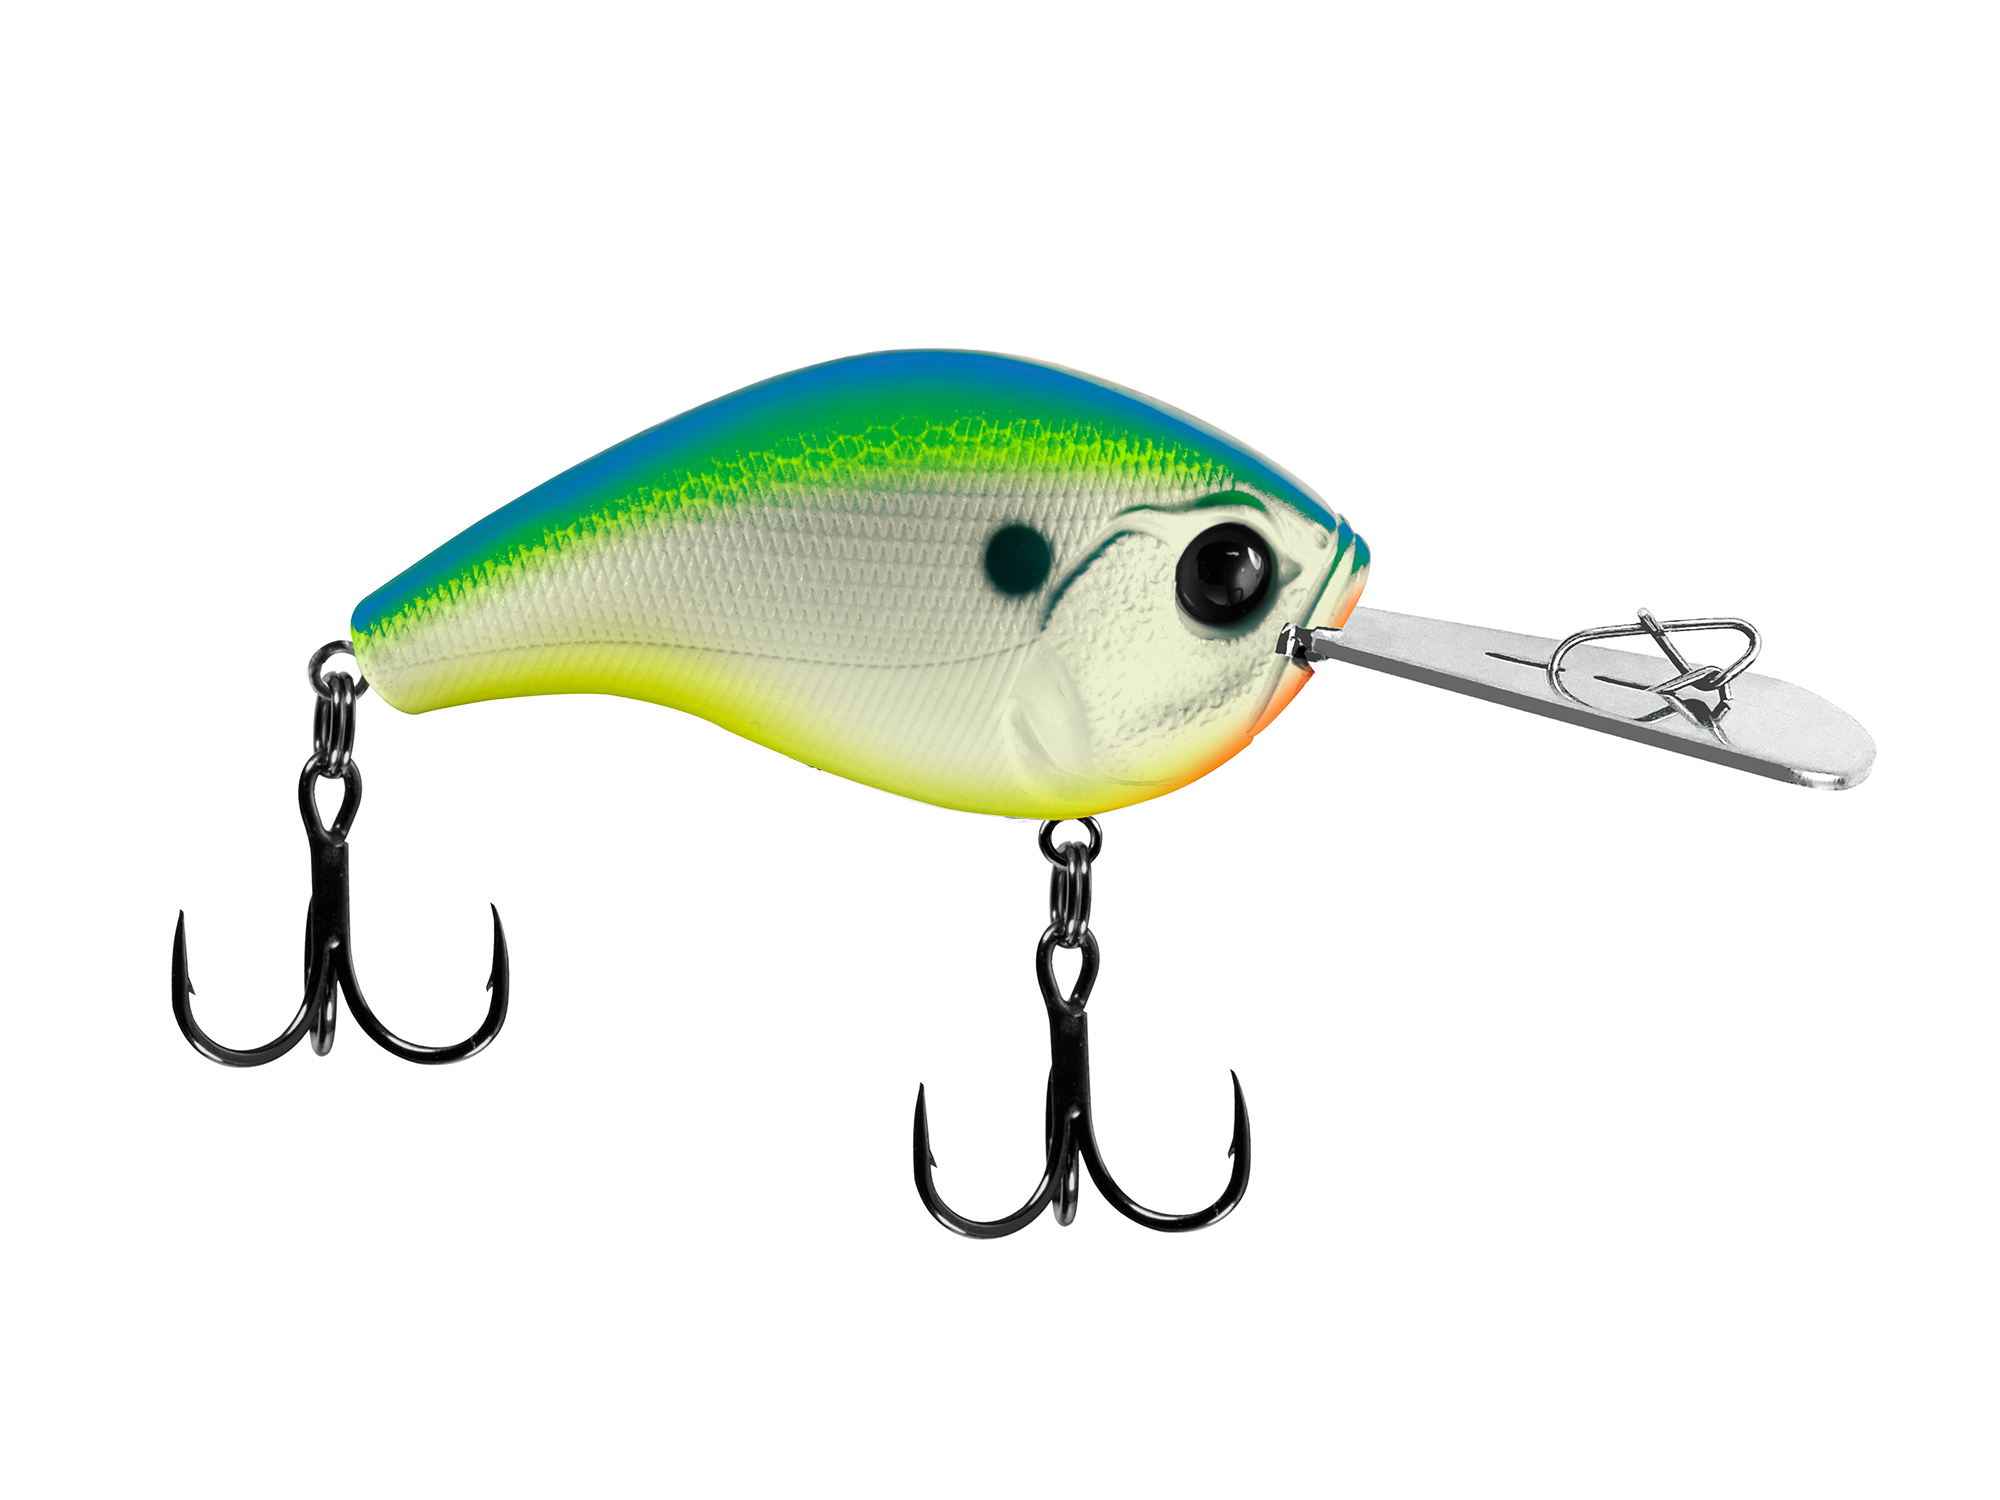 Featured Bait: 13 Fishing Jabber Jaw Hybrid Squarebill Crankbait